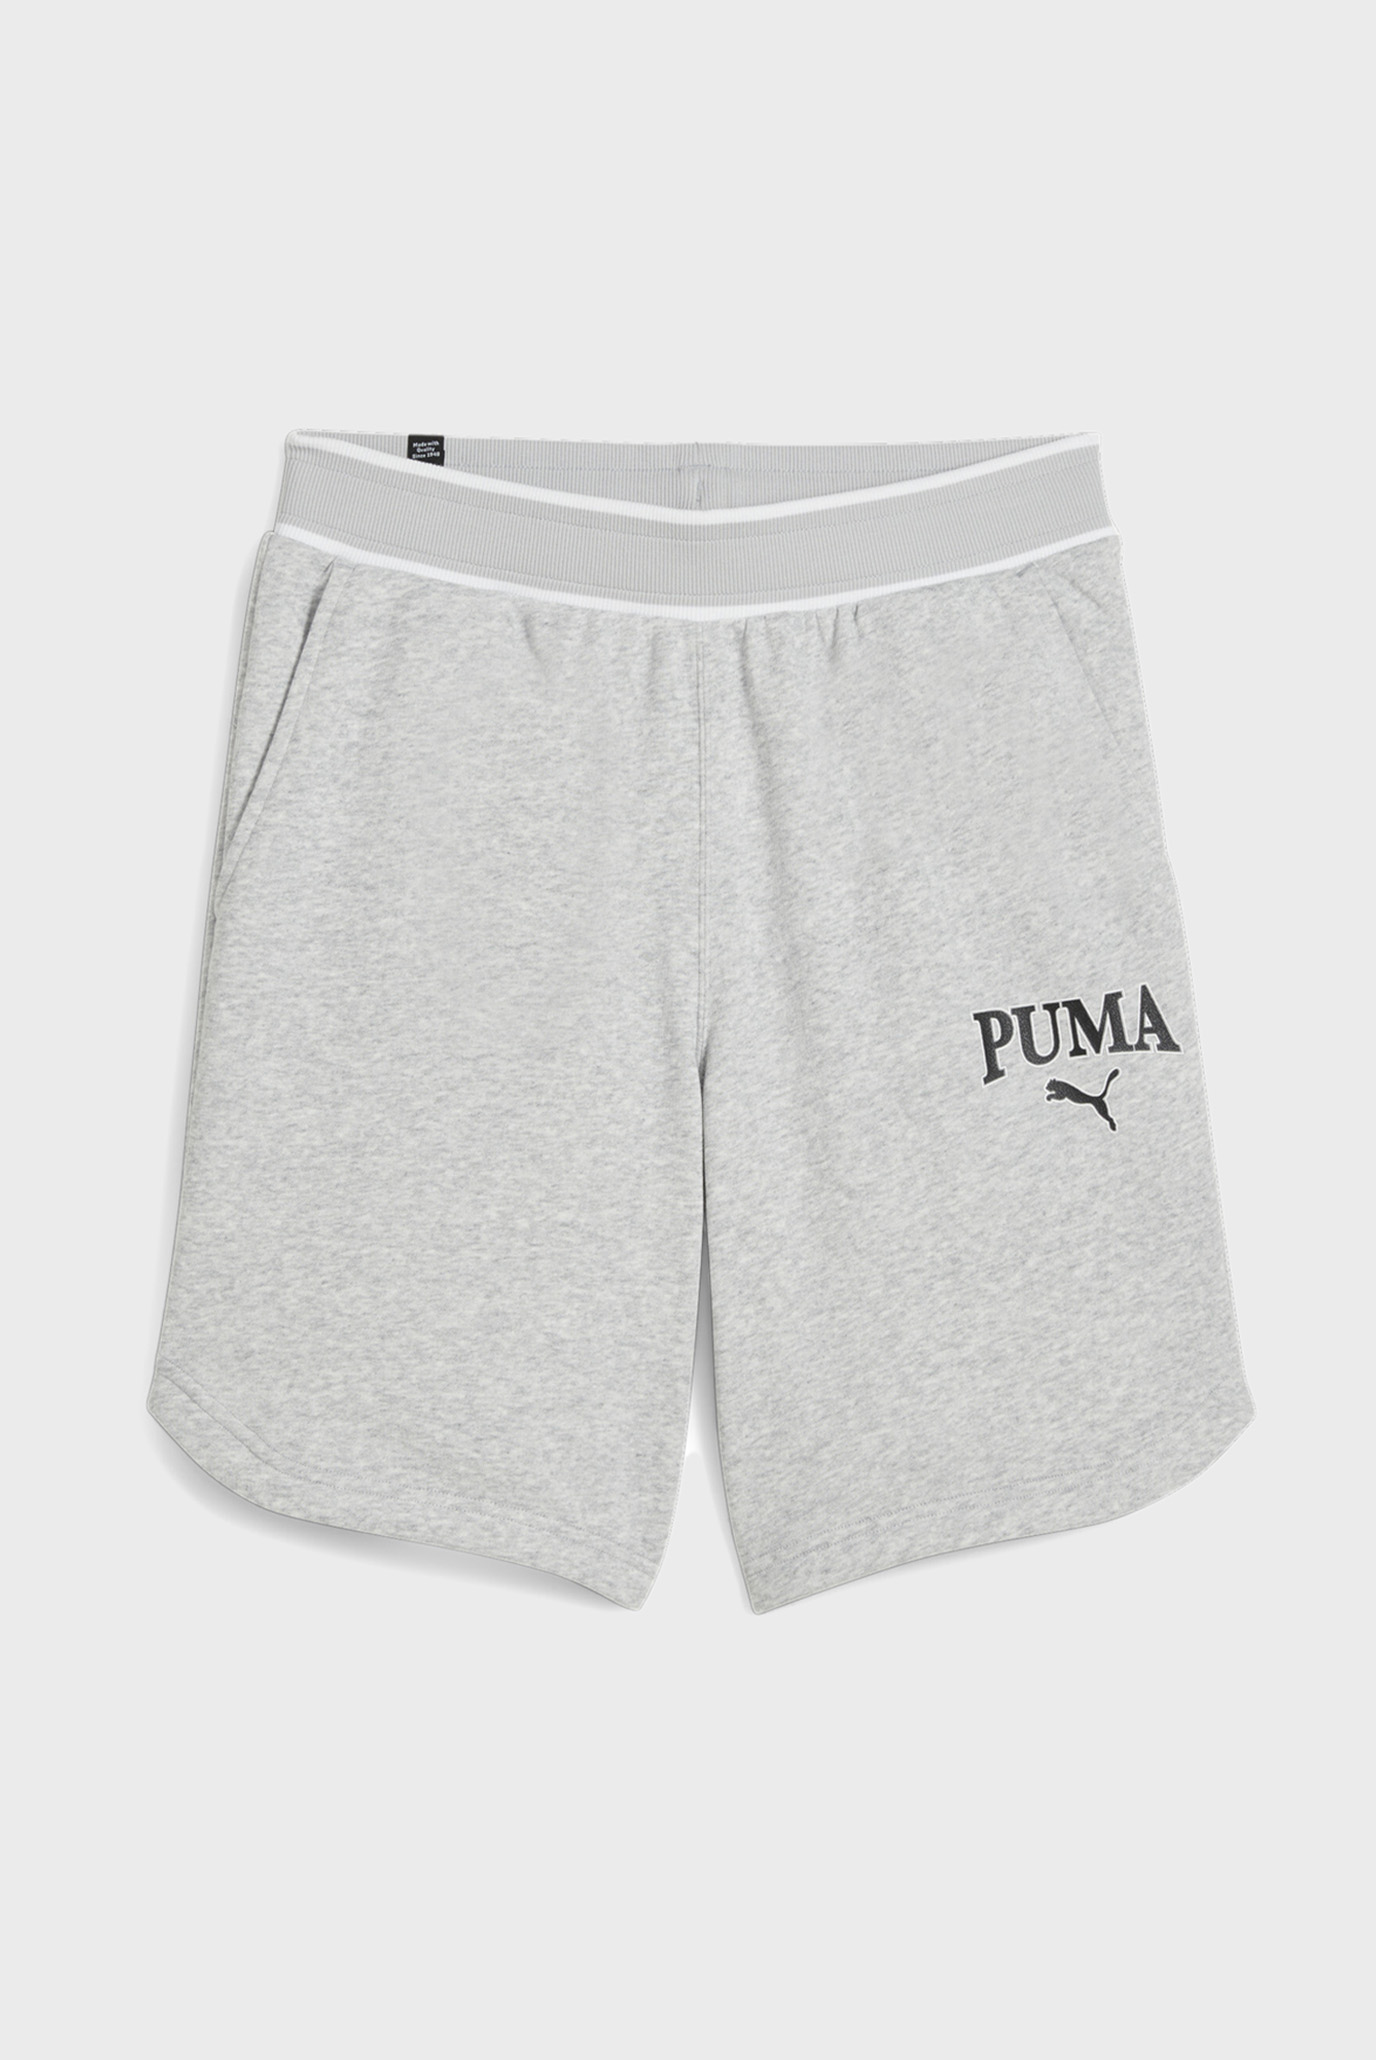 Чоловічі сірі шорти PUMA SQUAD Shorts 1